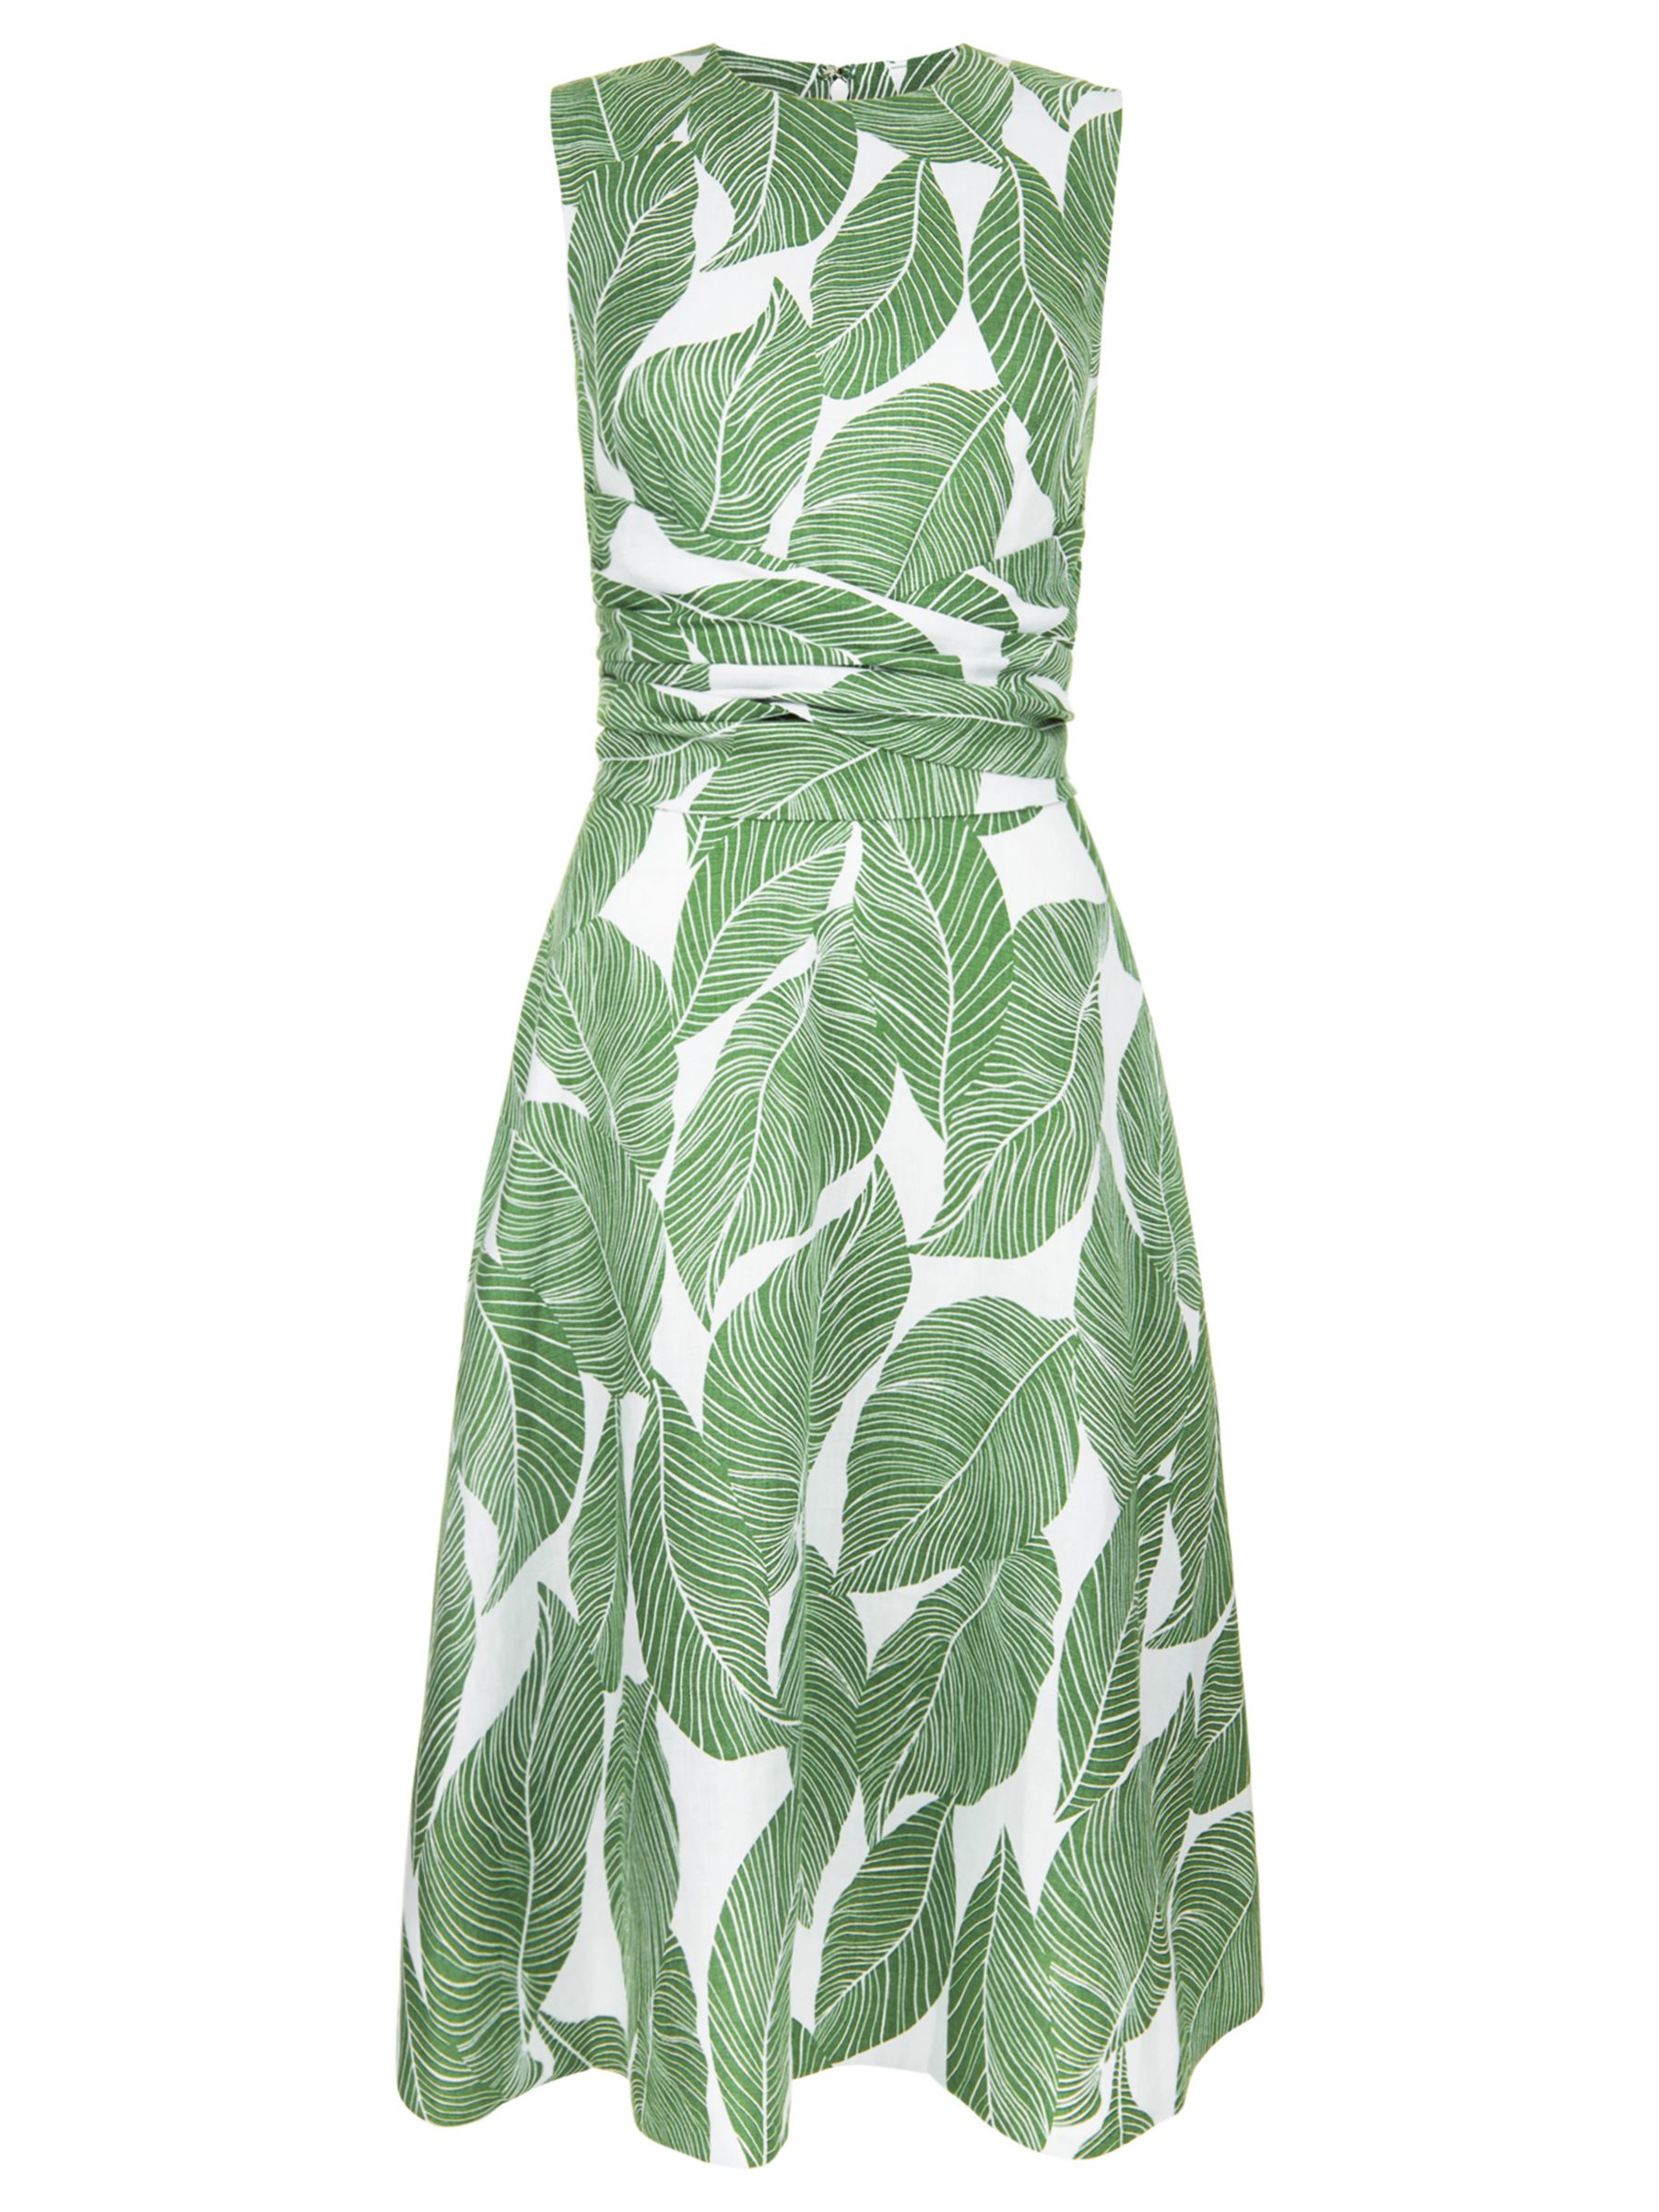 Hobbs Twitchill Dress, Green/Multi